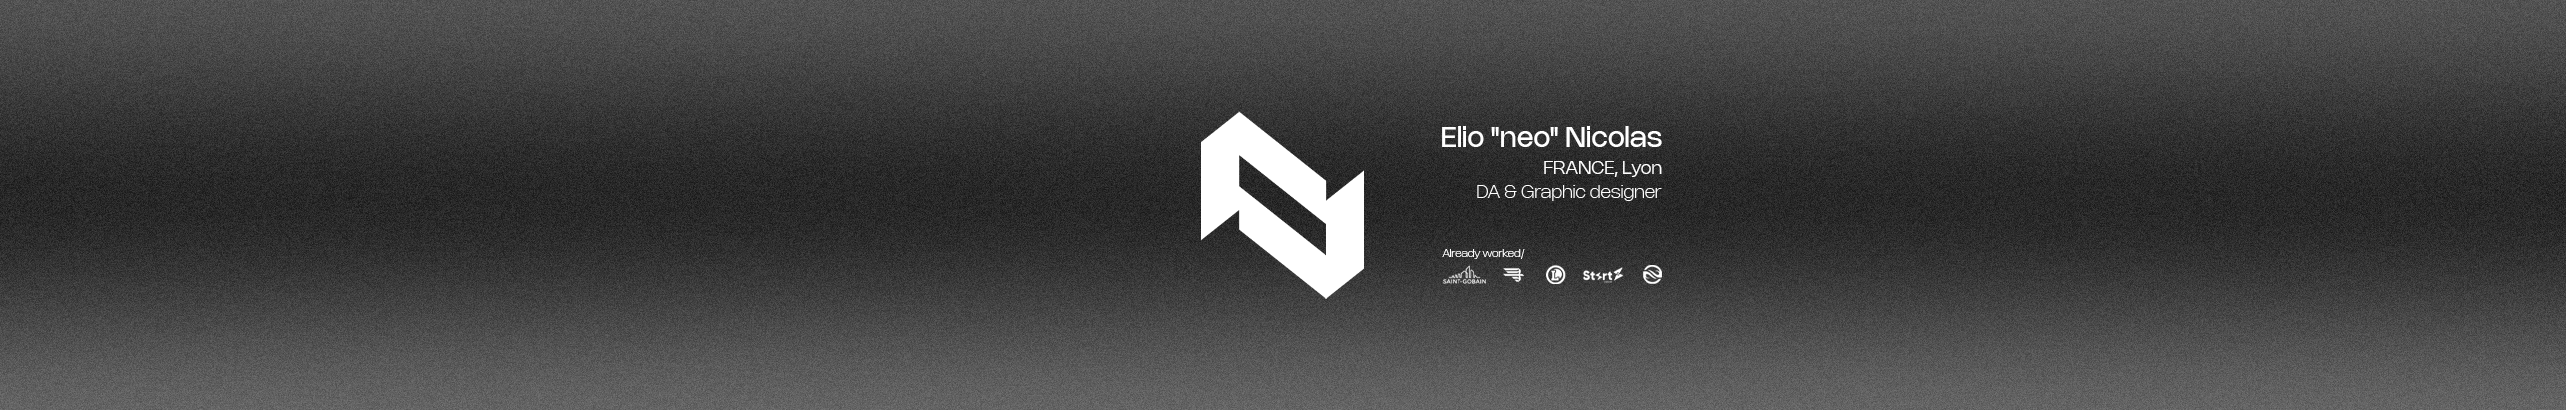 Profielbanner van Elio Nicolas